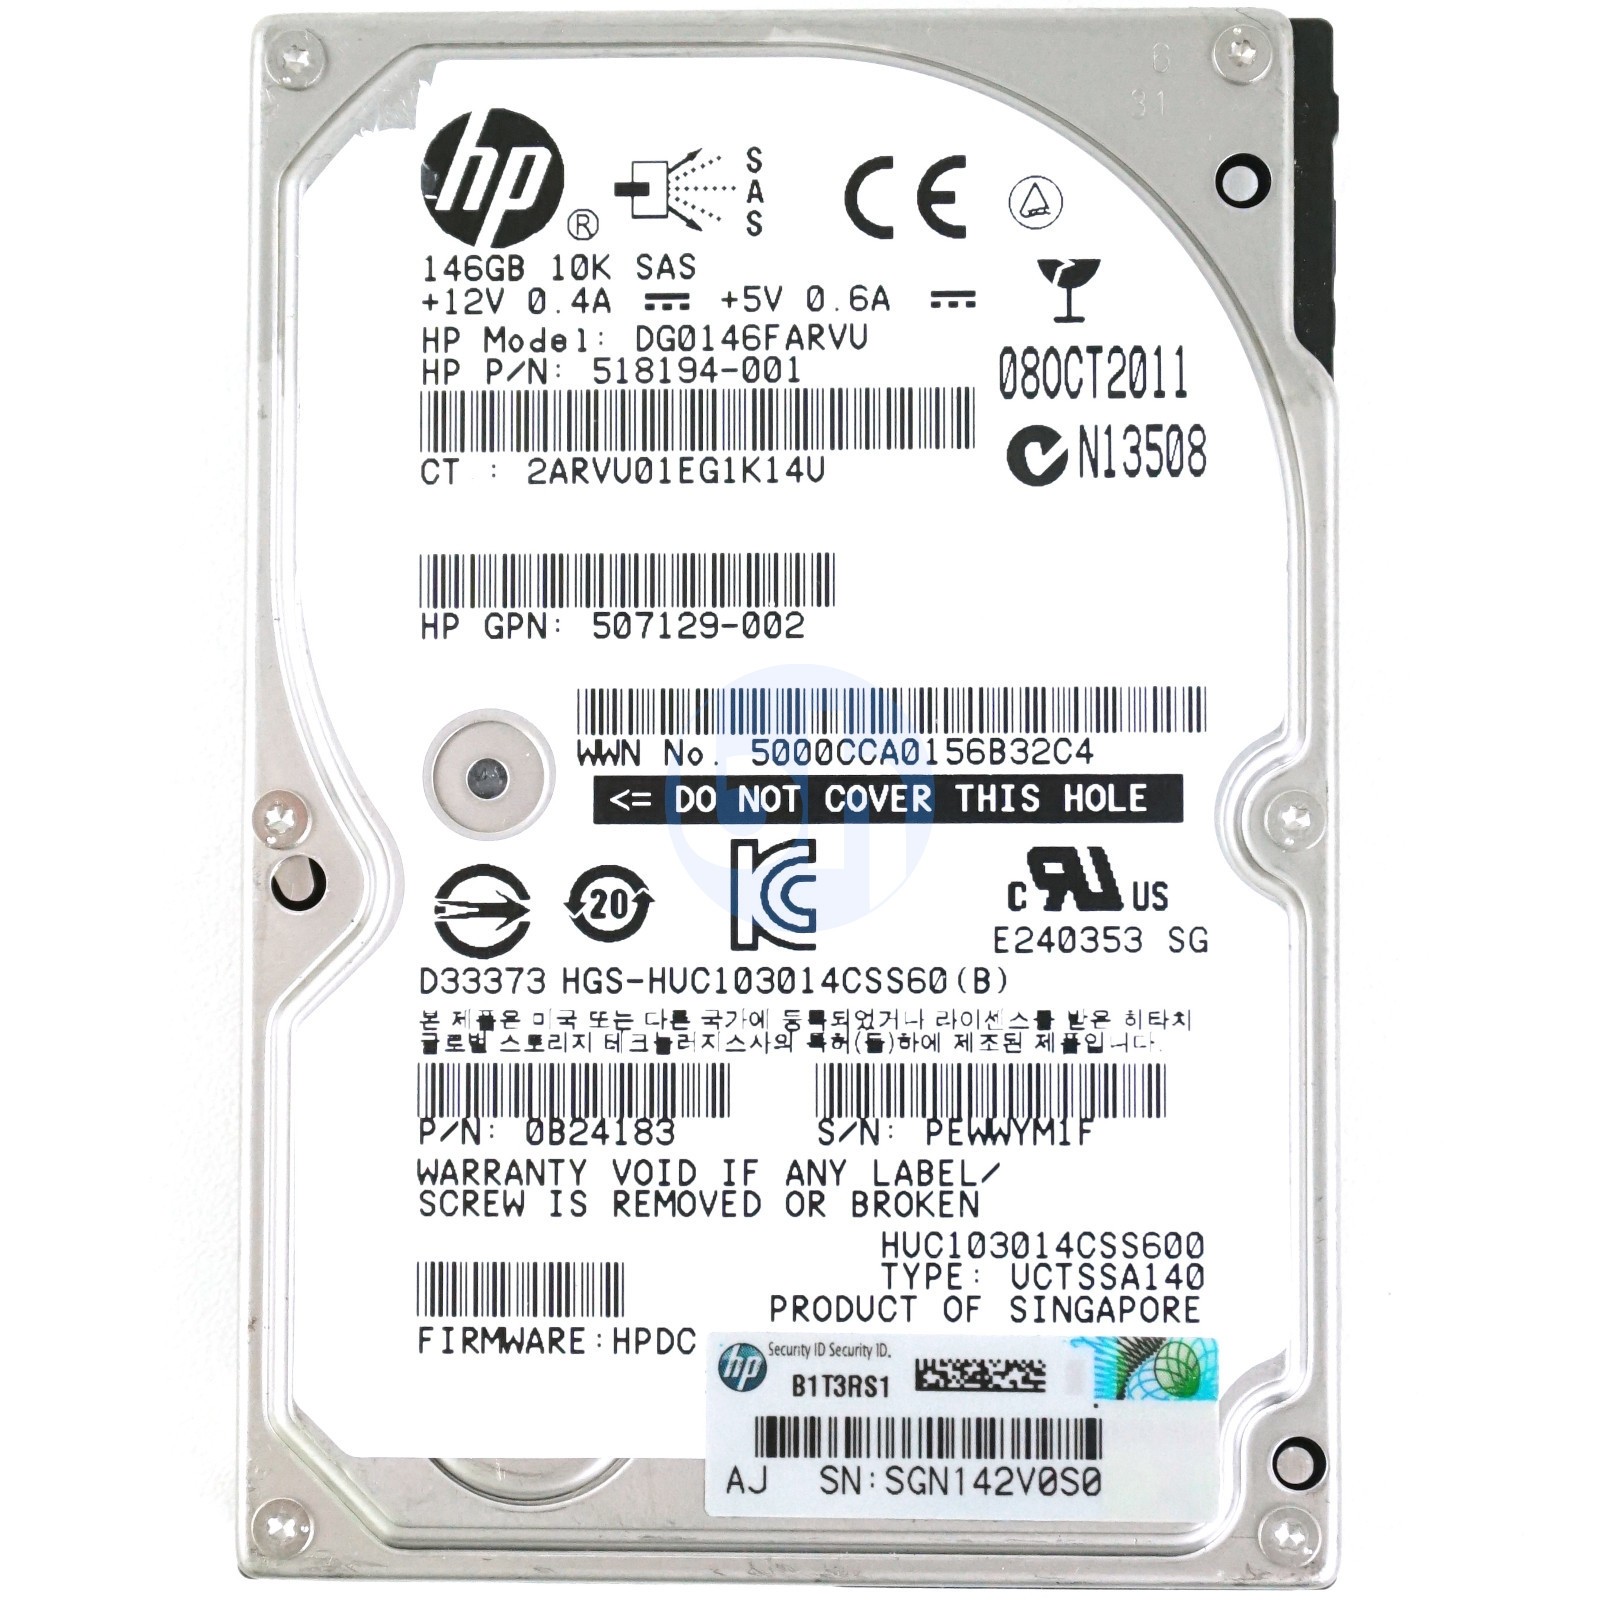 HP (518194-001) 146GB Dual Port SAS-2 (SFF 2.5") 6Gbps 10K HDD